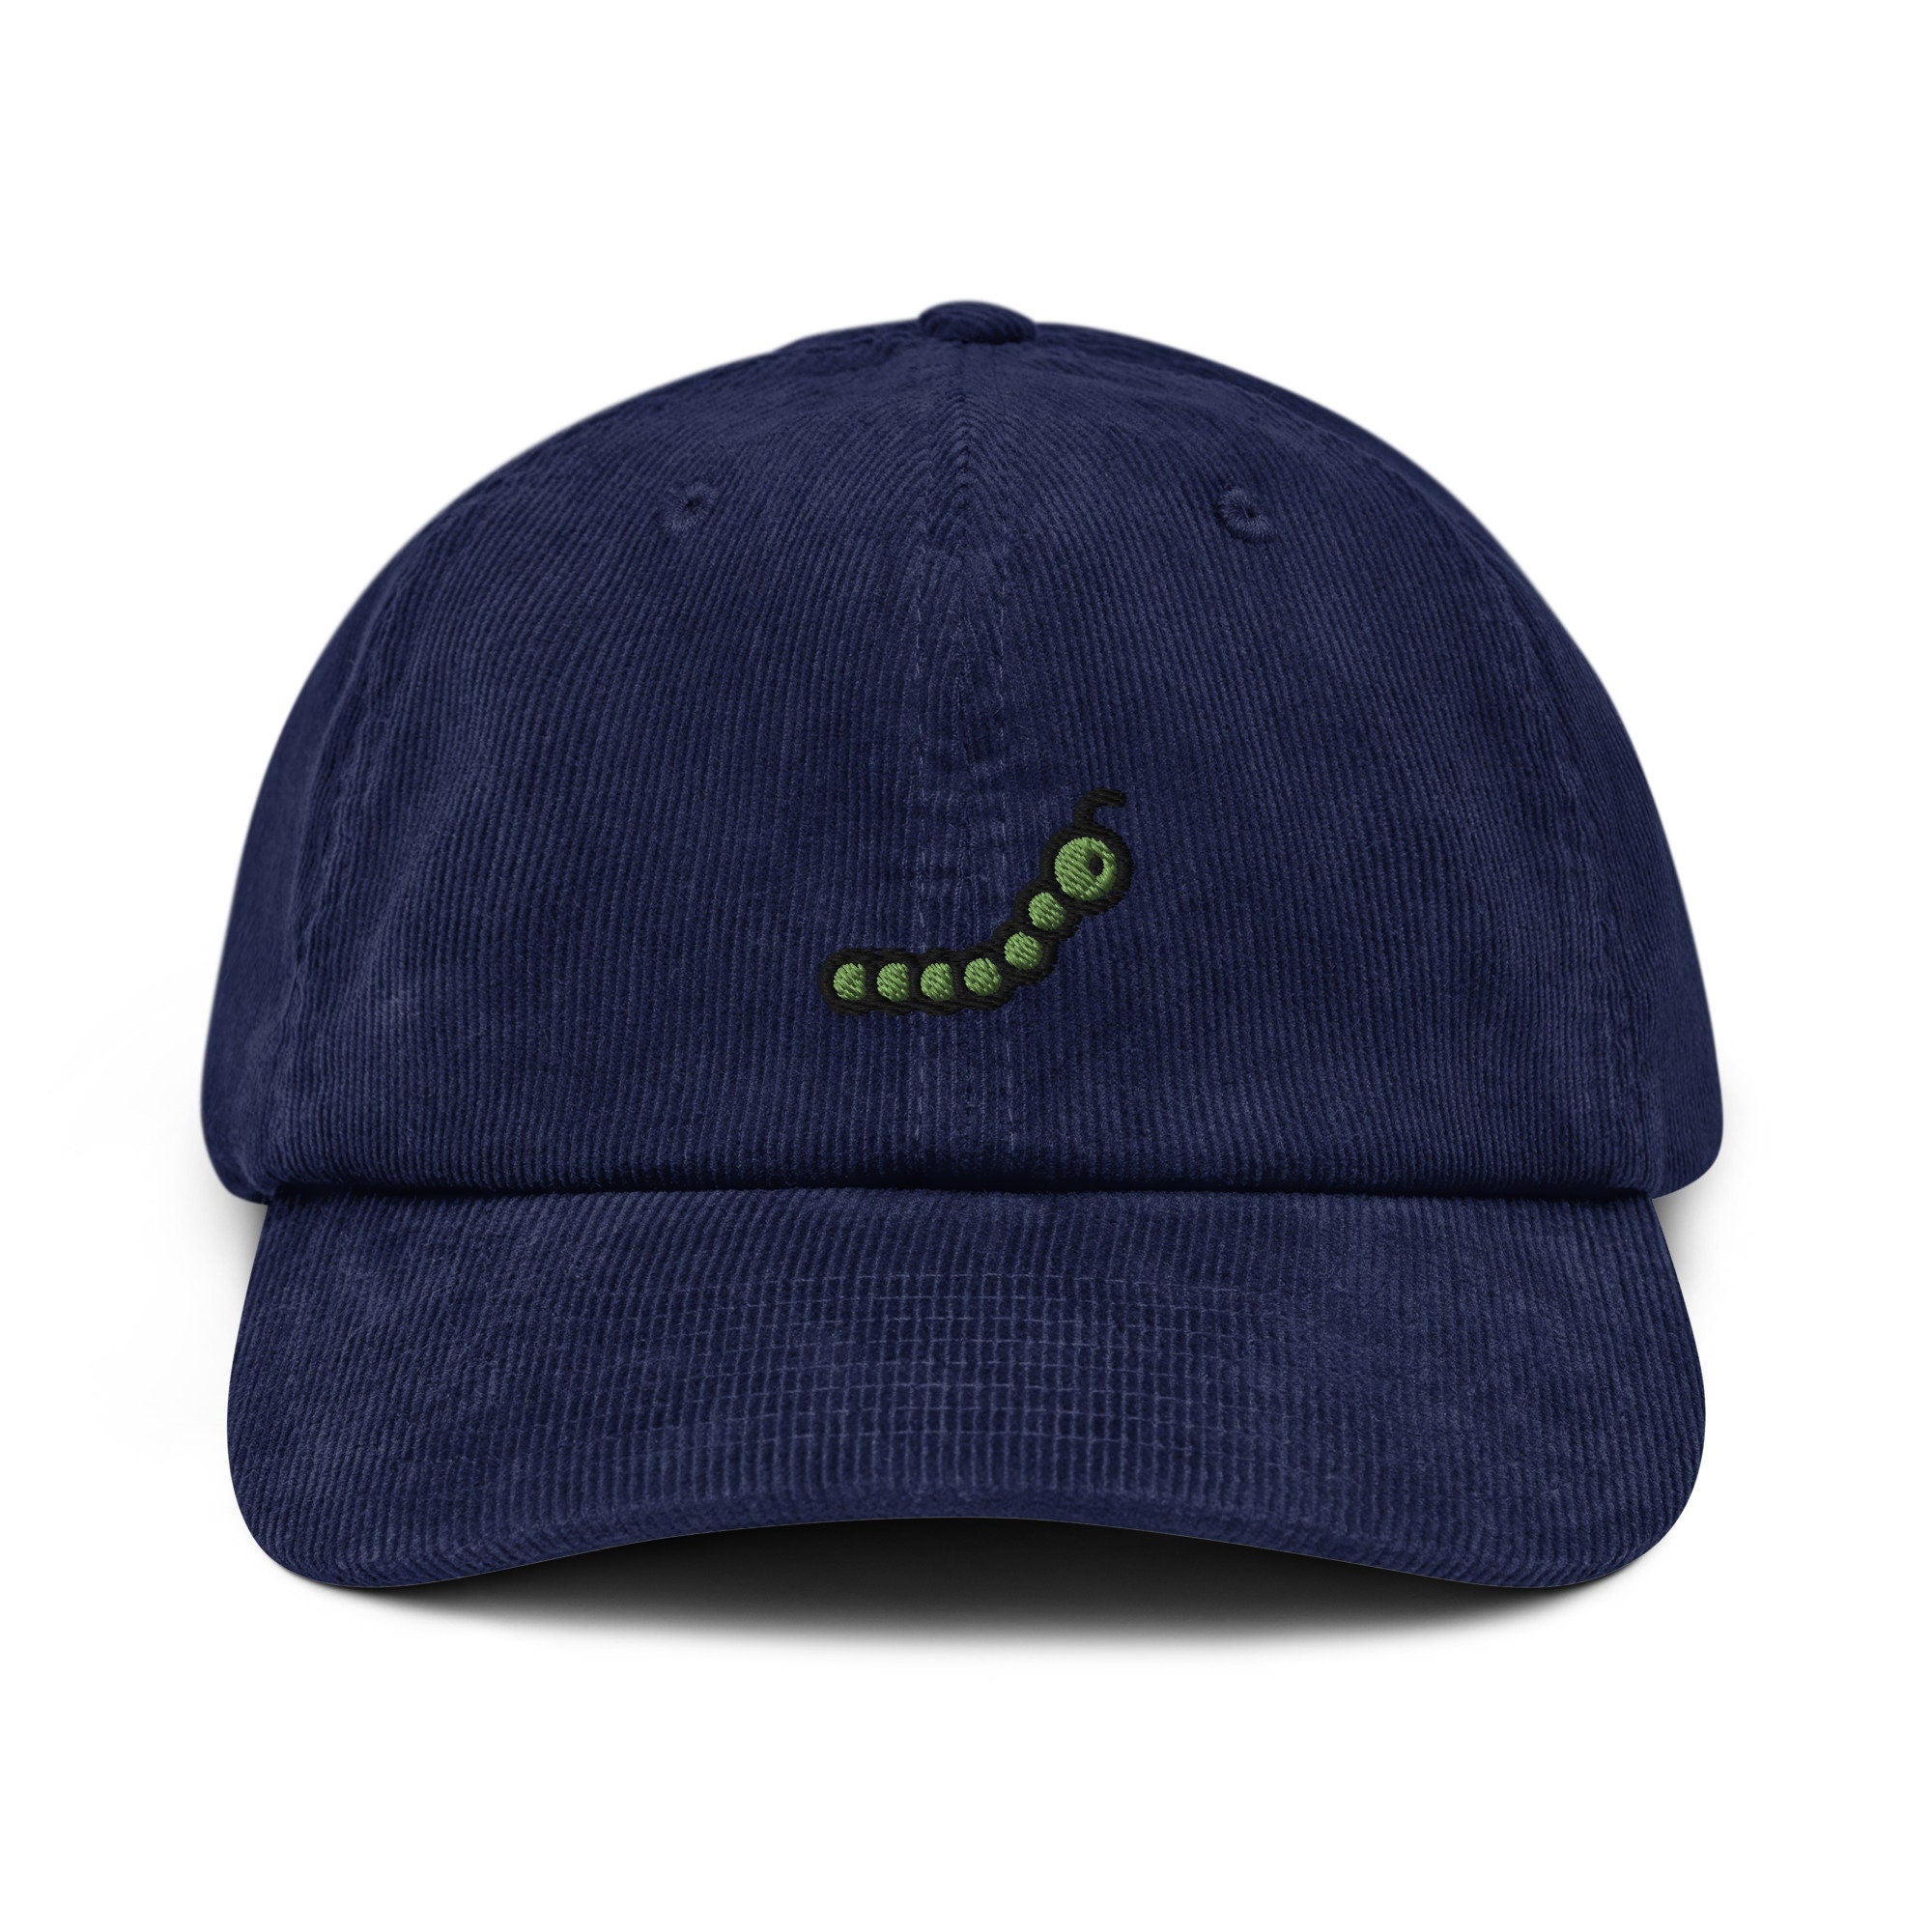 Caterpillar Corduroy Hat, Handmade Embroidered Corduroy Dad Cap - Multiple Colors